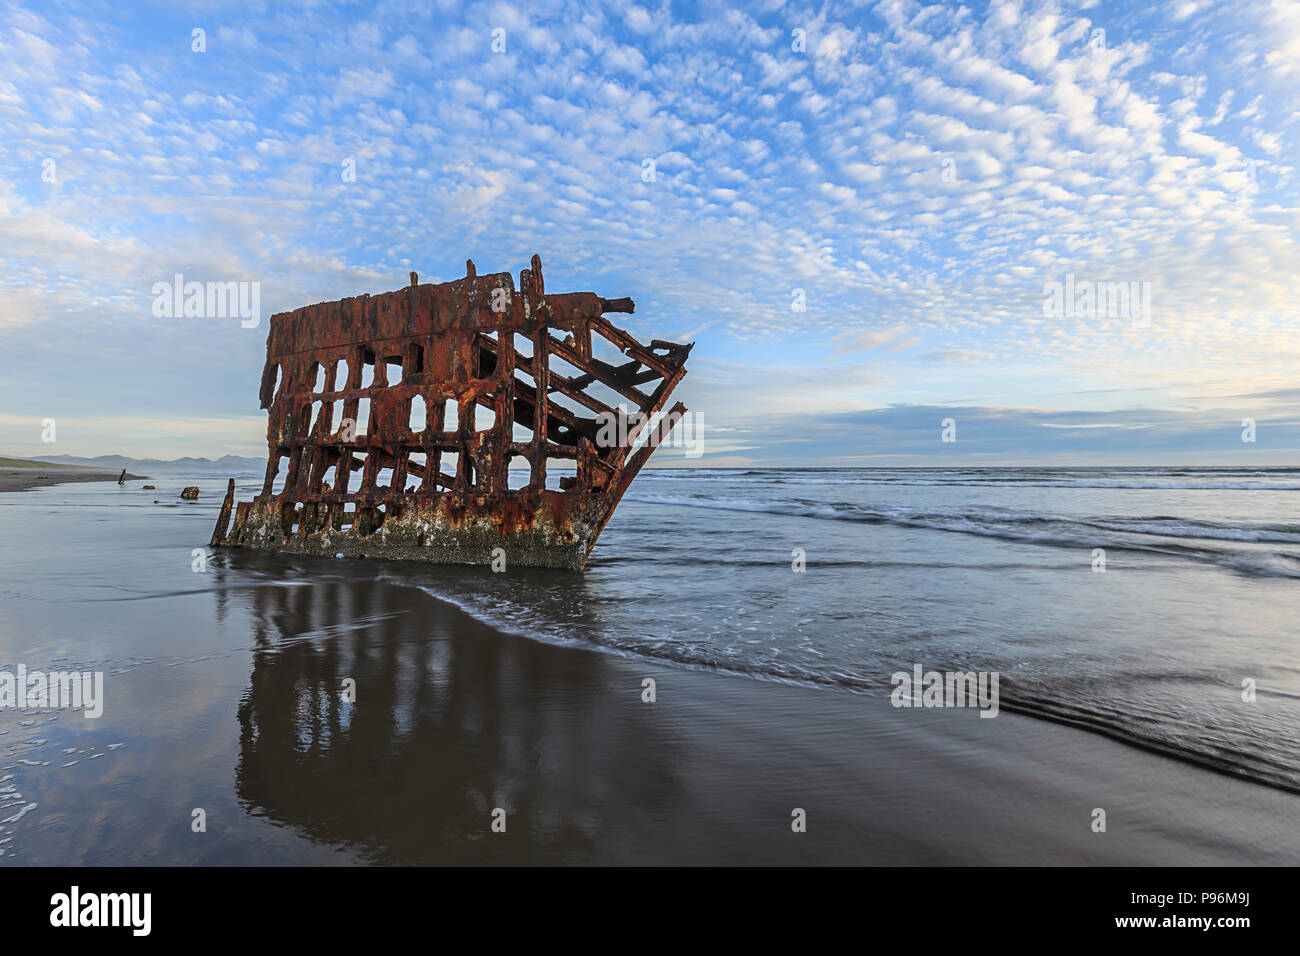 The Peter Iredale shipwreck near Astoria Oregon taken near sunset. Stock Photo